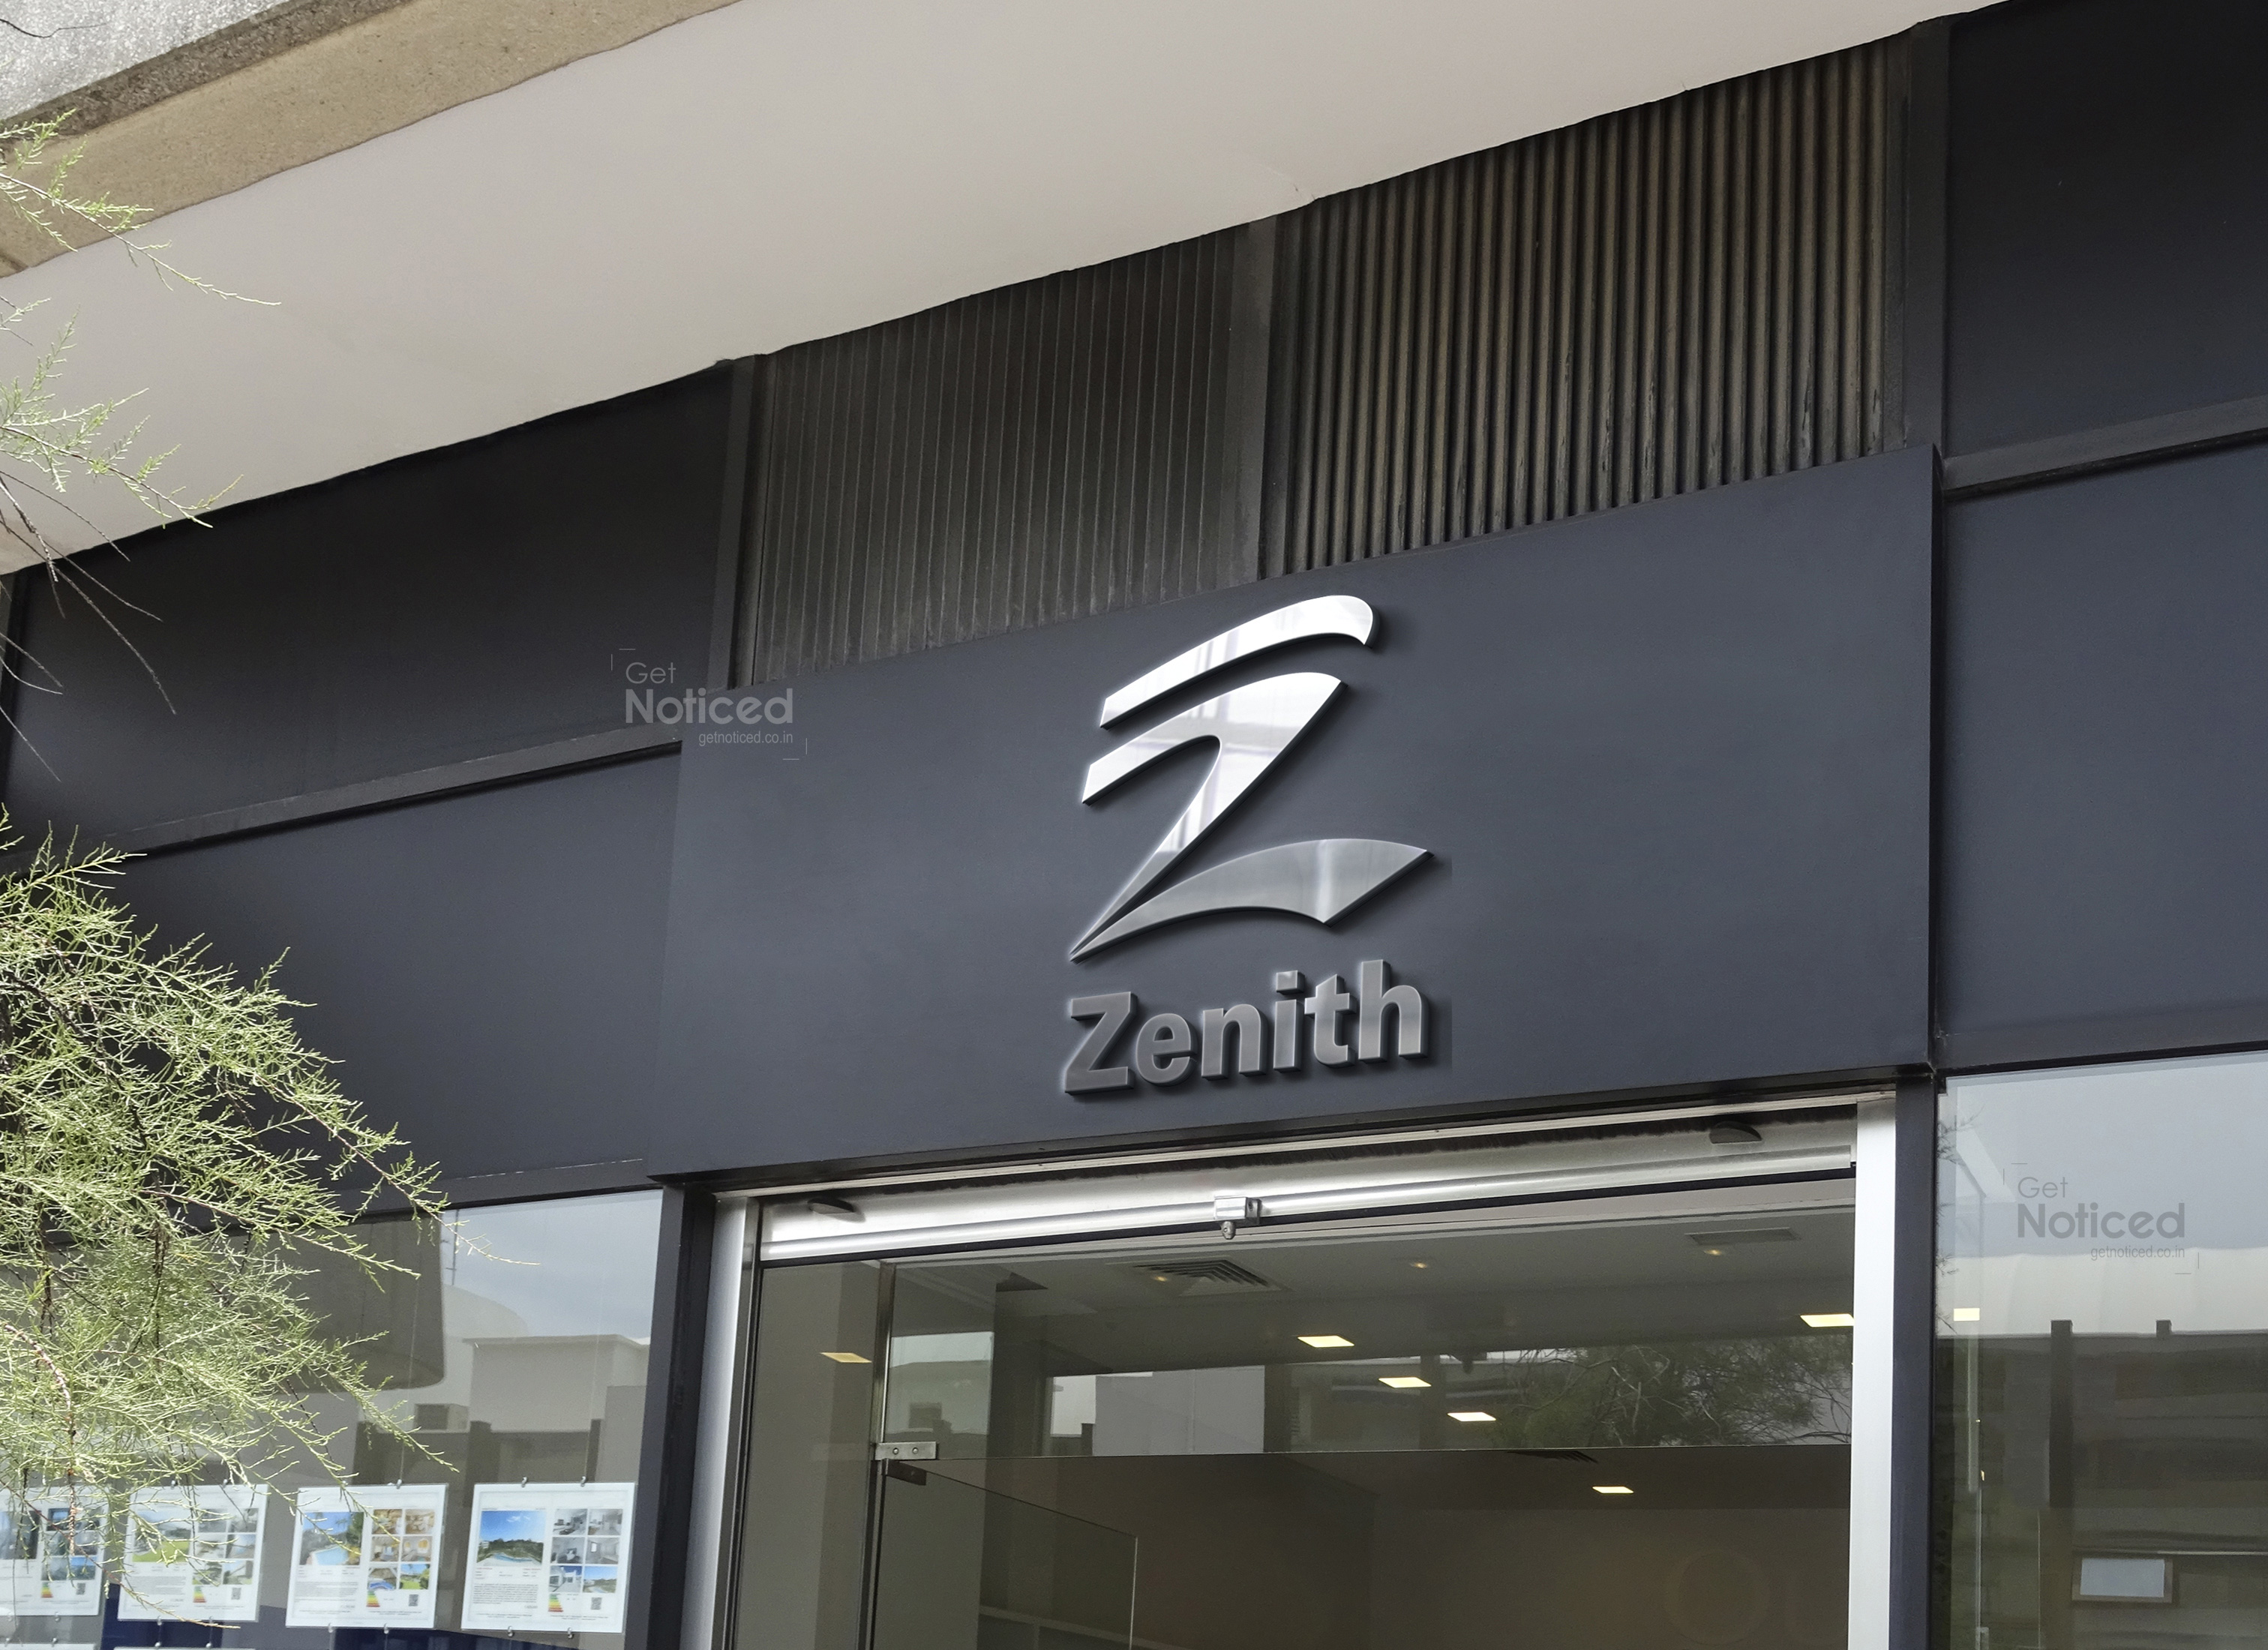 Zenith Logo Design